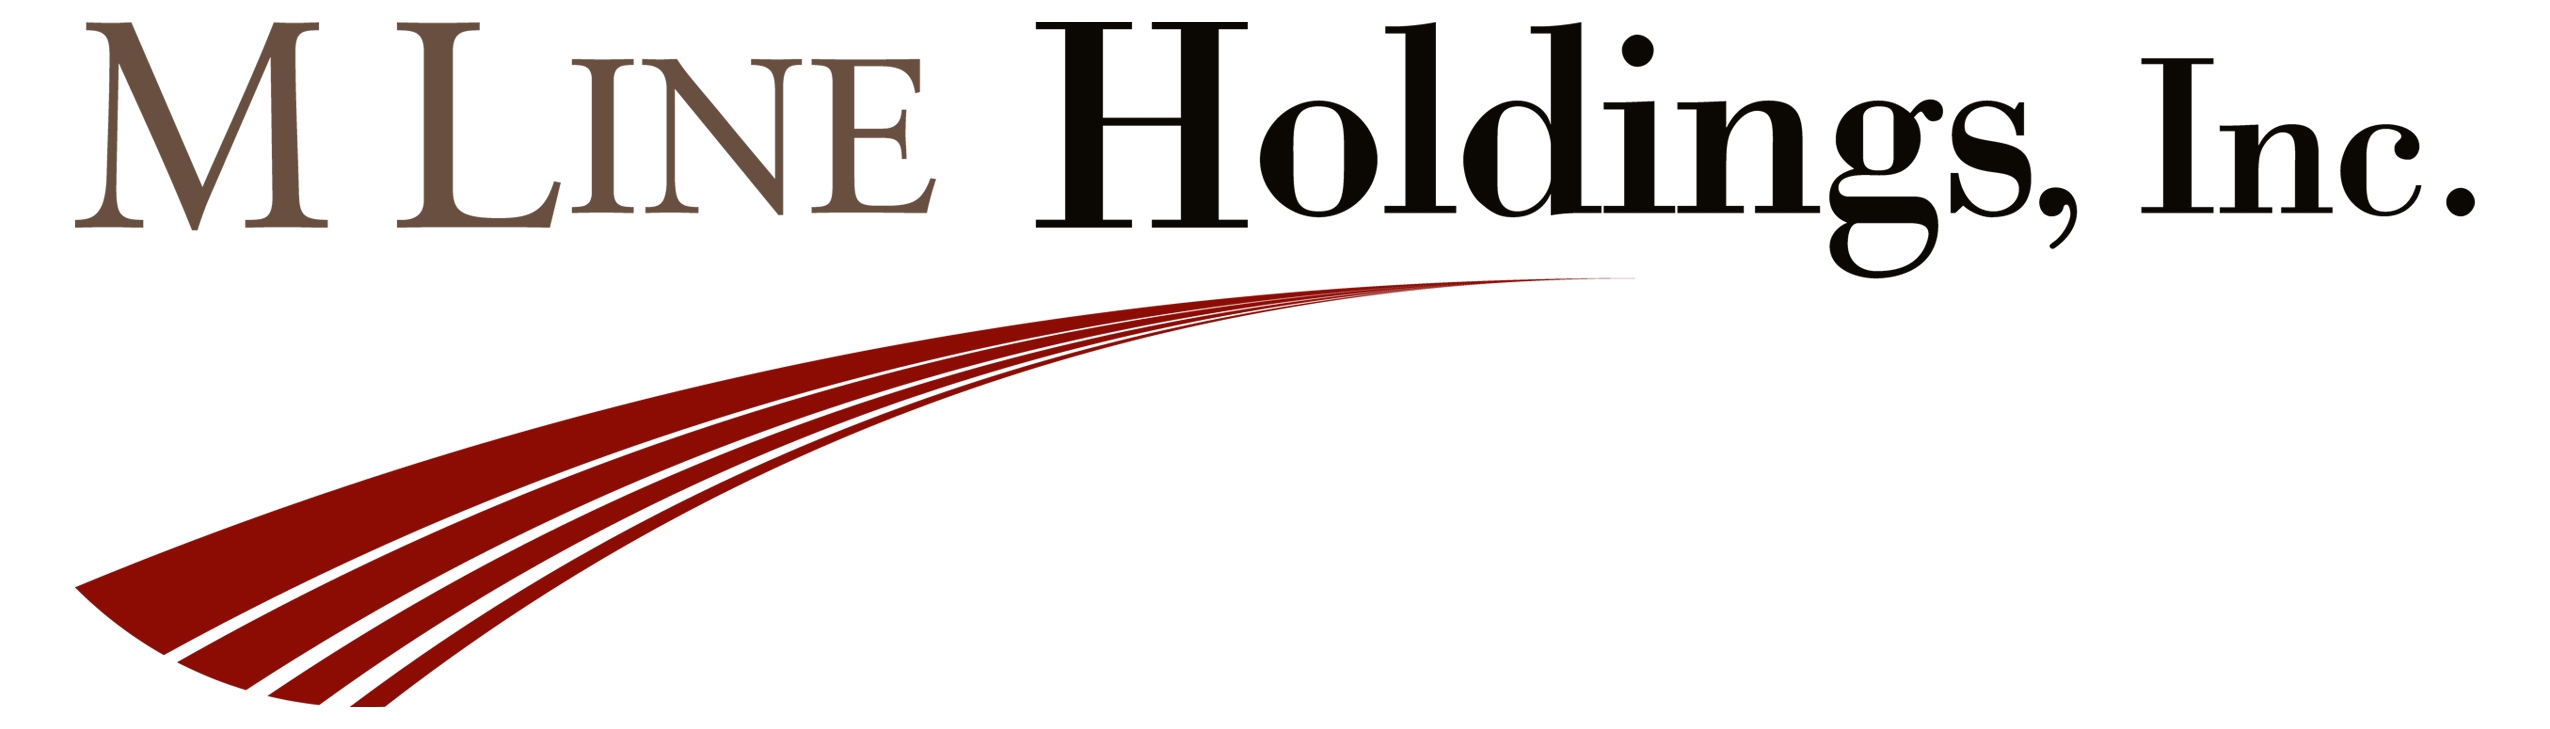 M Line Holdings, Inc. Logo